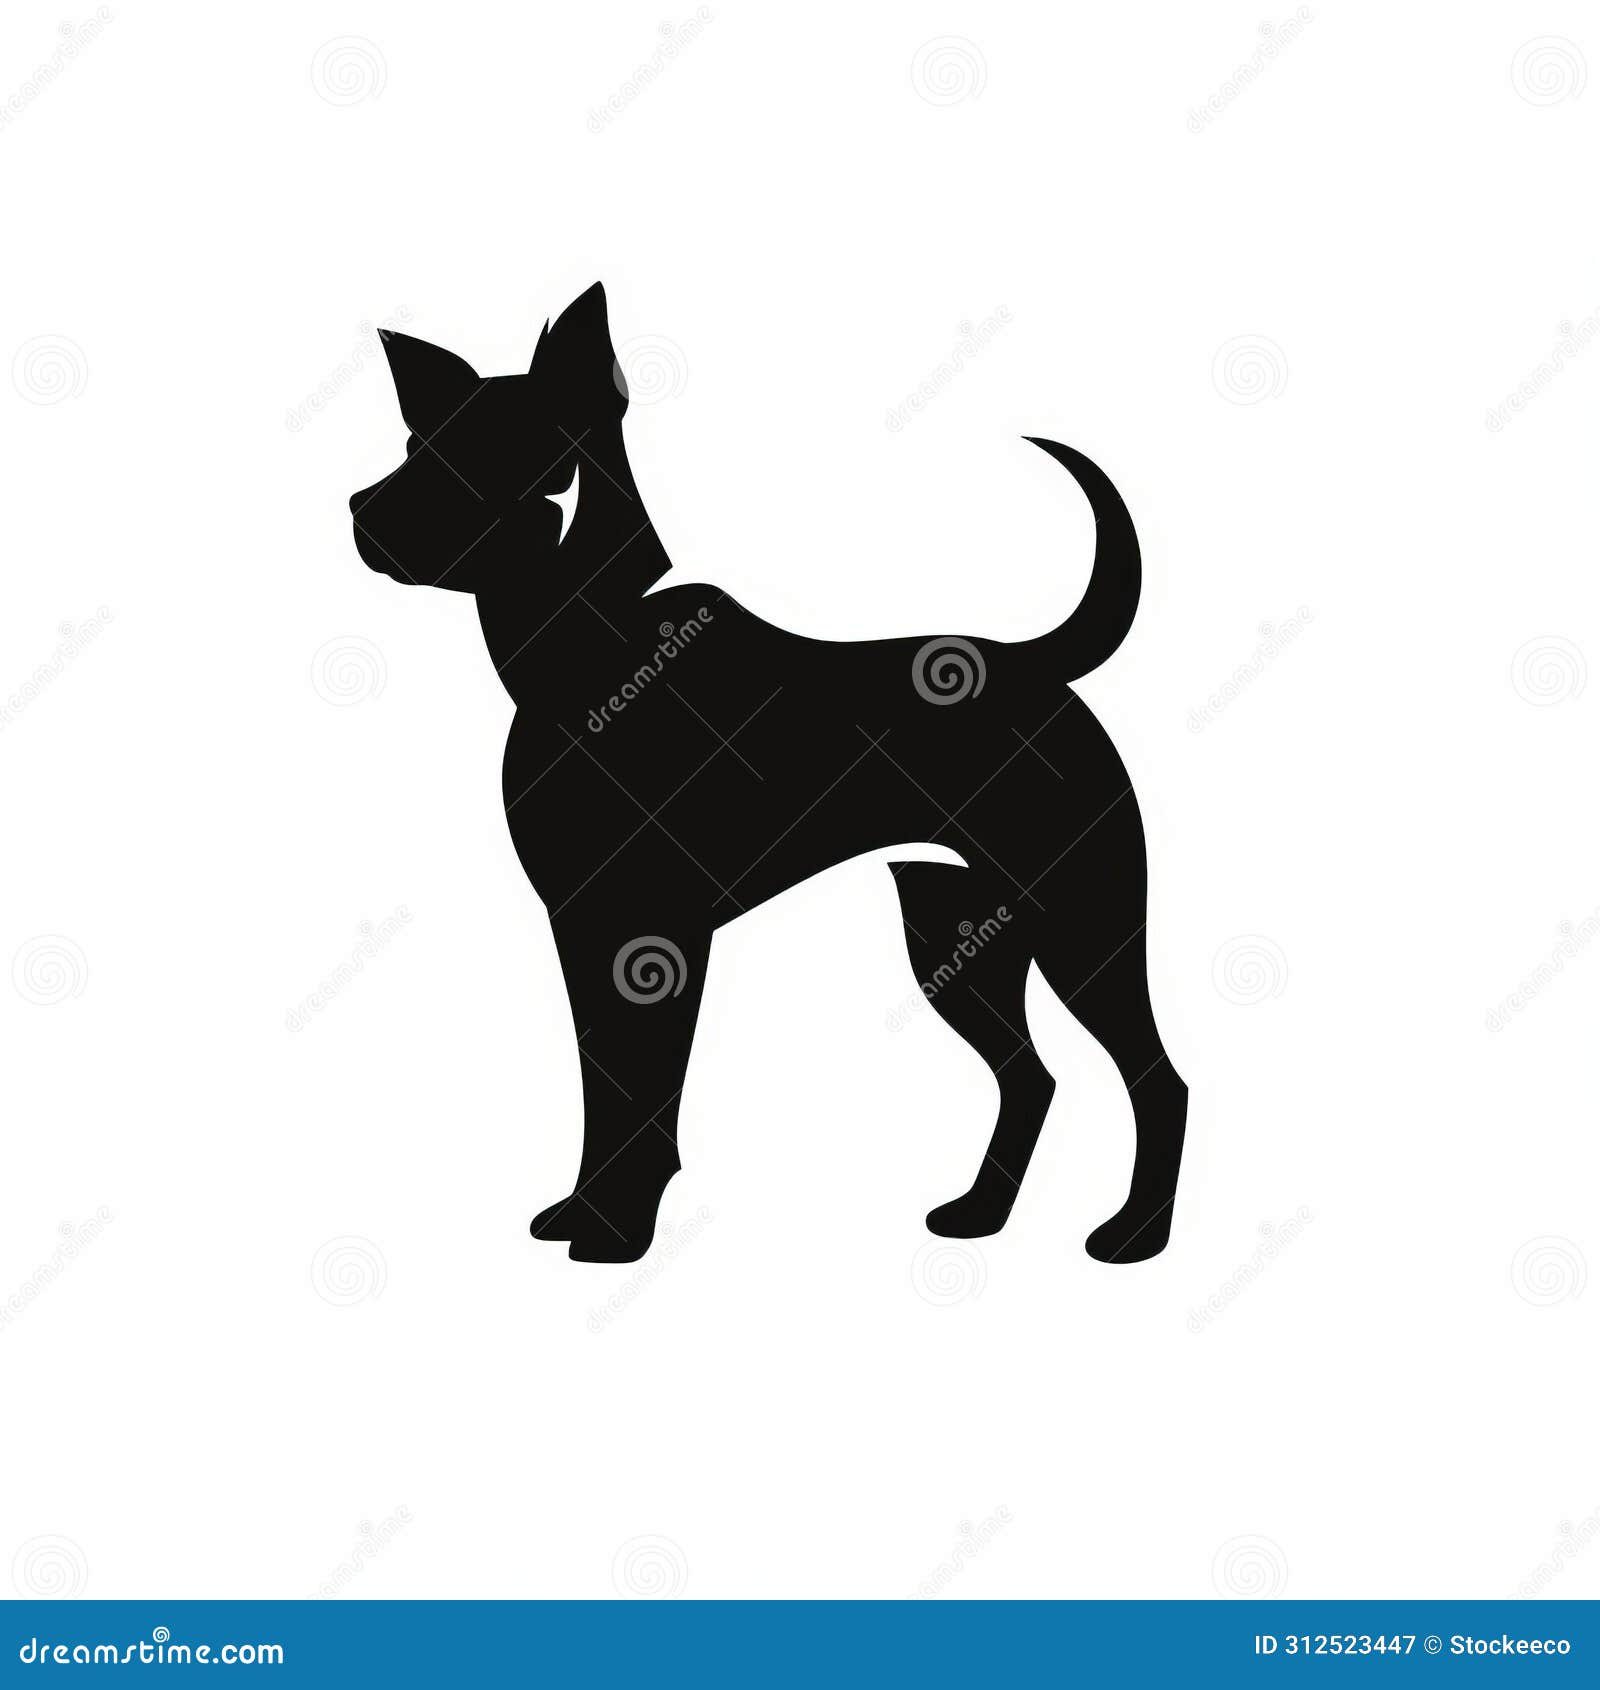 minimalistic black dog silhouette icon on white background